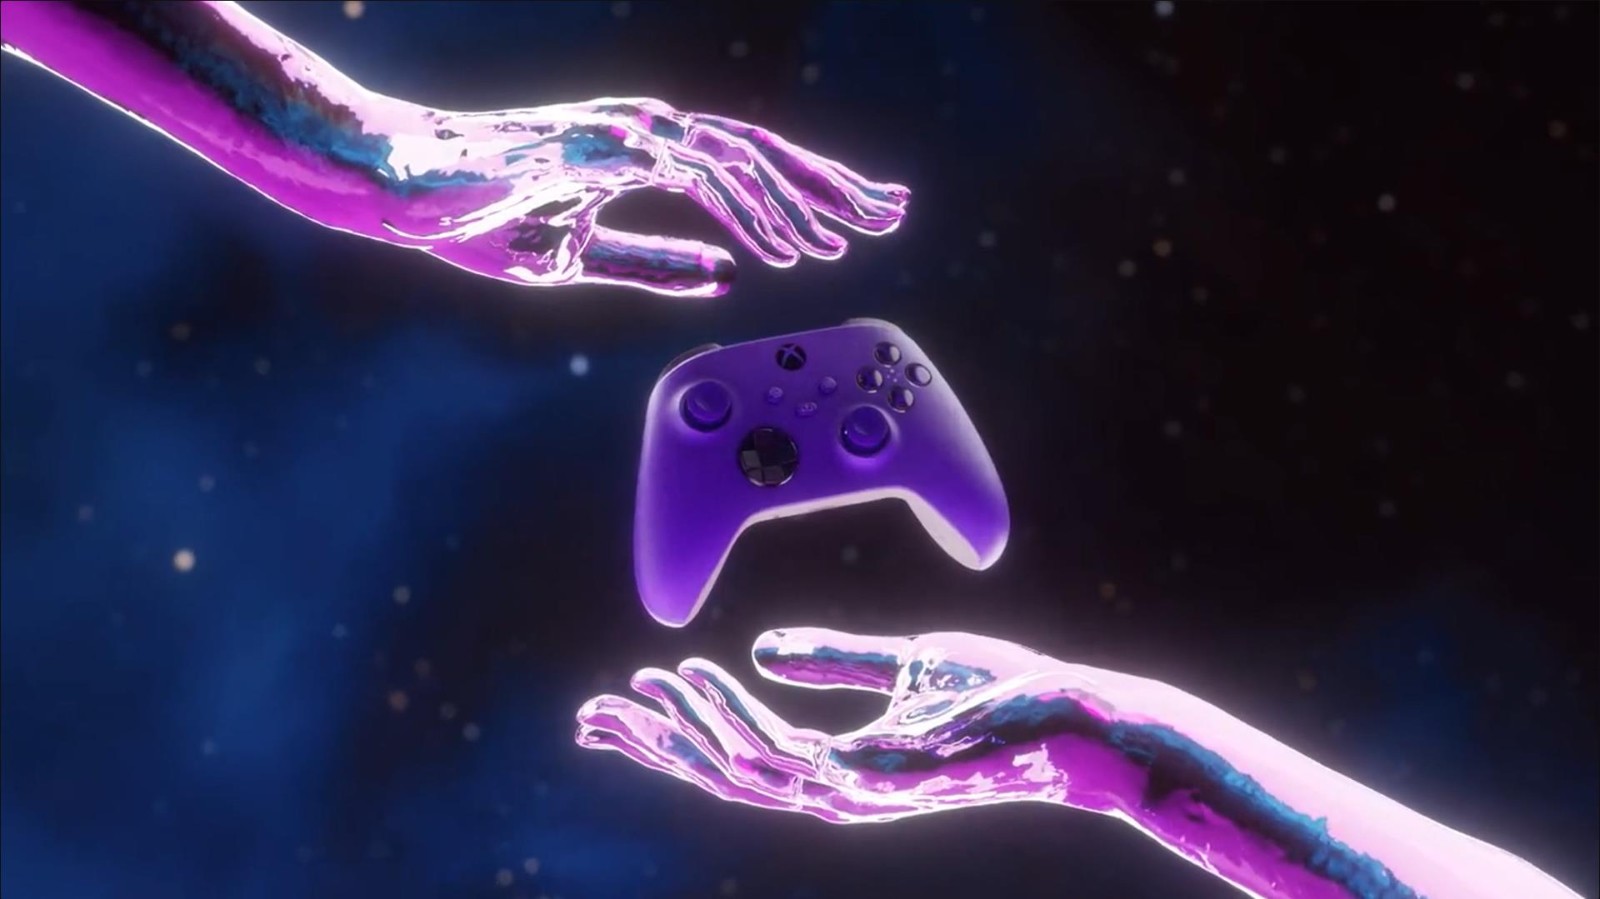 Xbox推出新配色手柄“星光紫” 9月19日发售